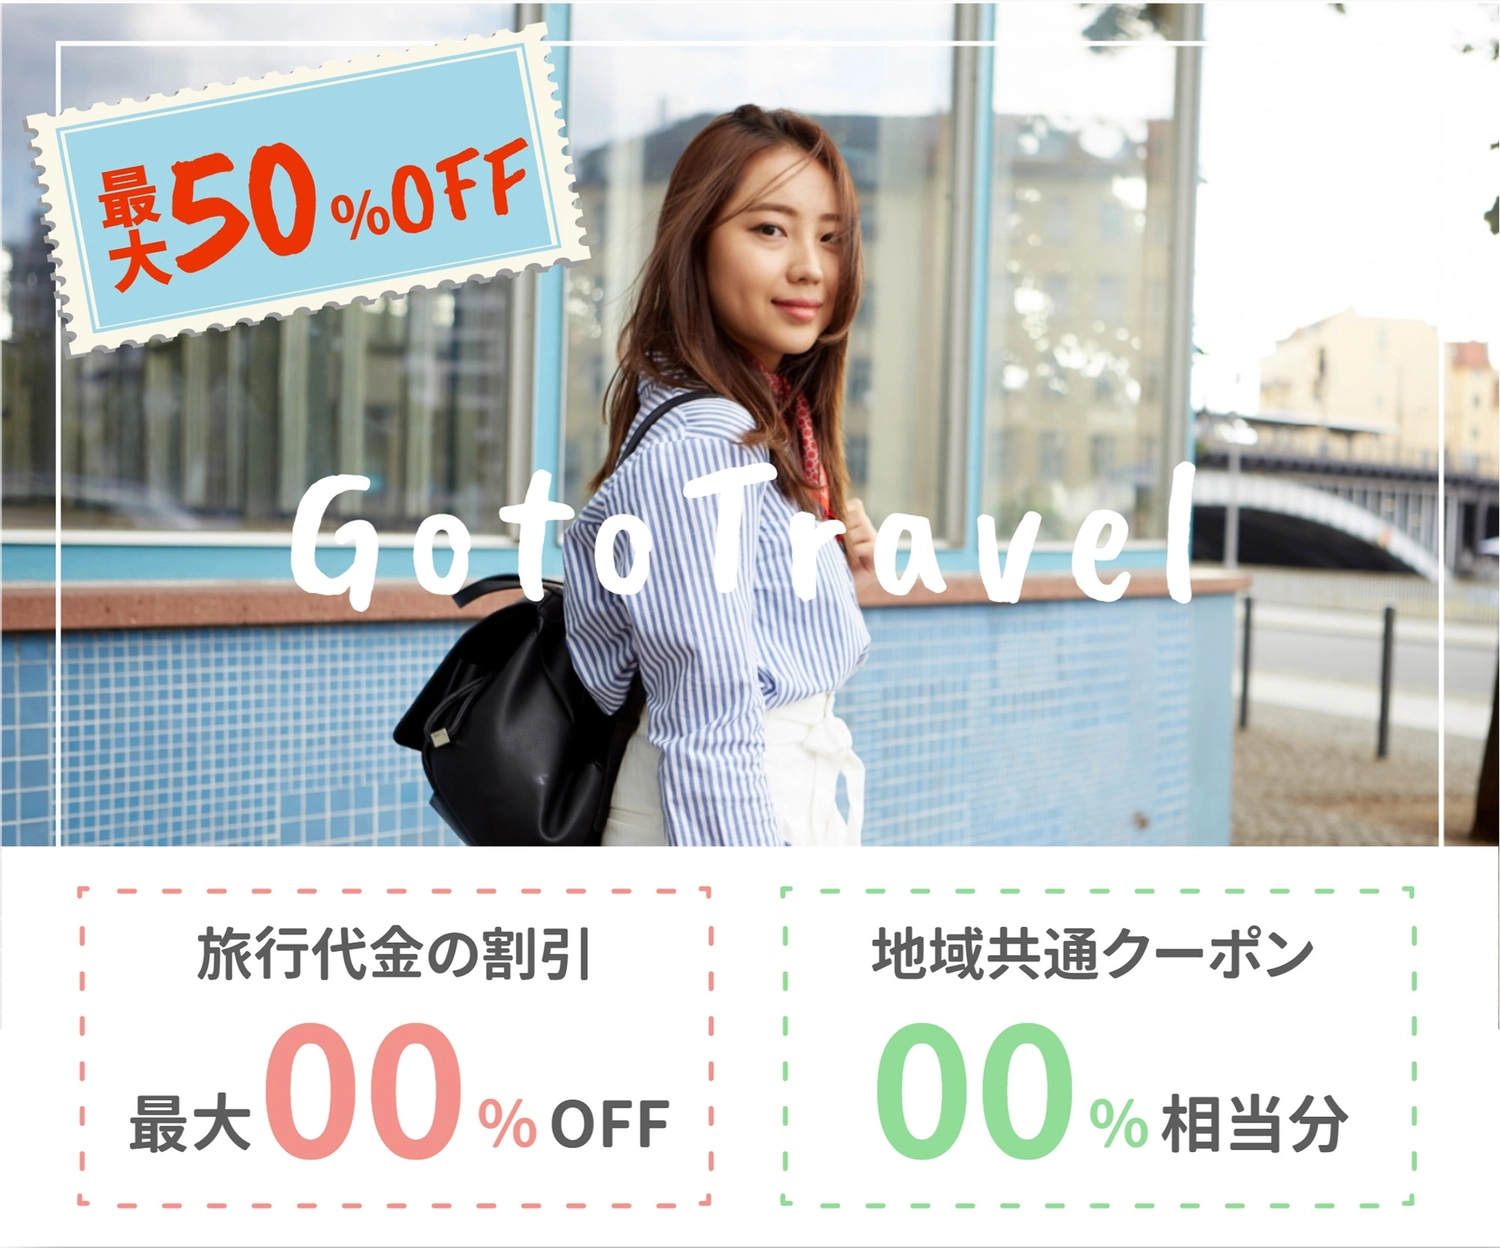 Gotoトラベルの広告バナー（写真）, 금액, 할인, 디자인, 기치 템플릿